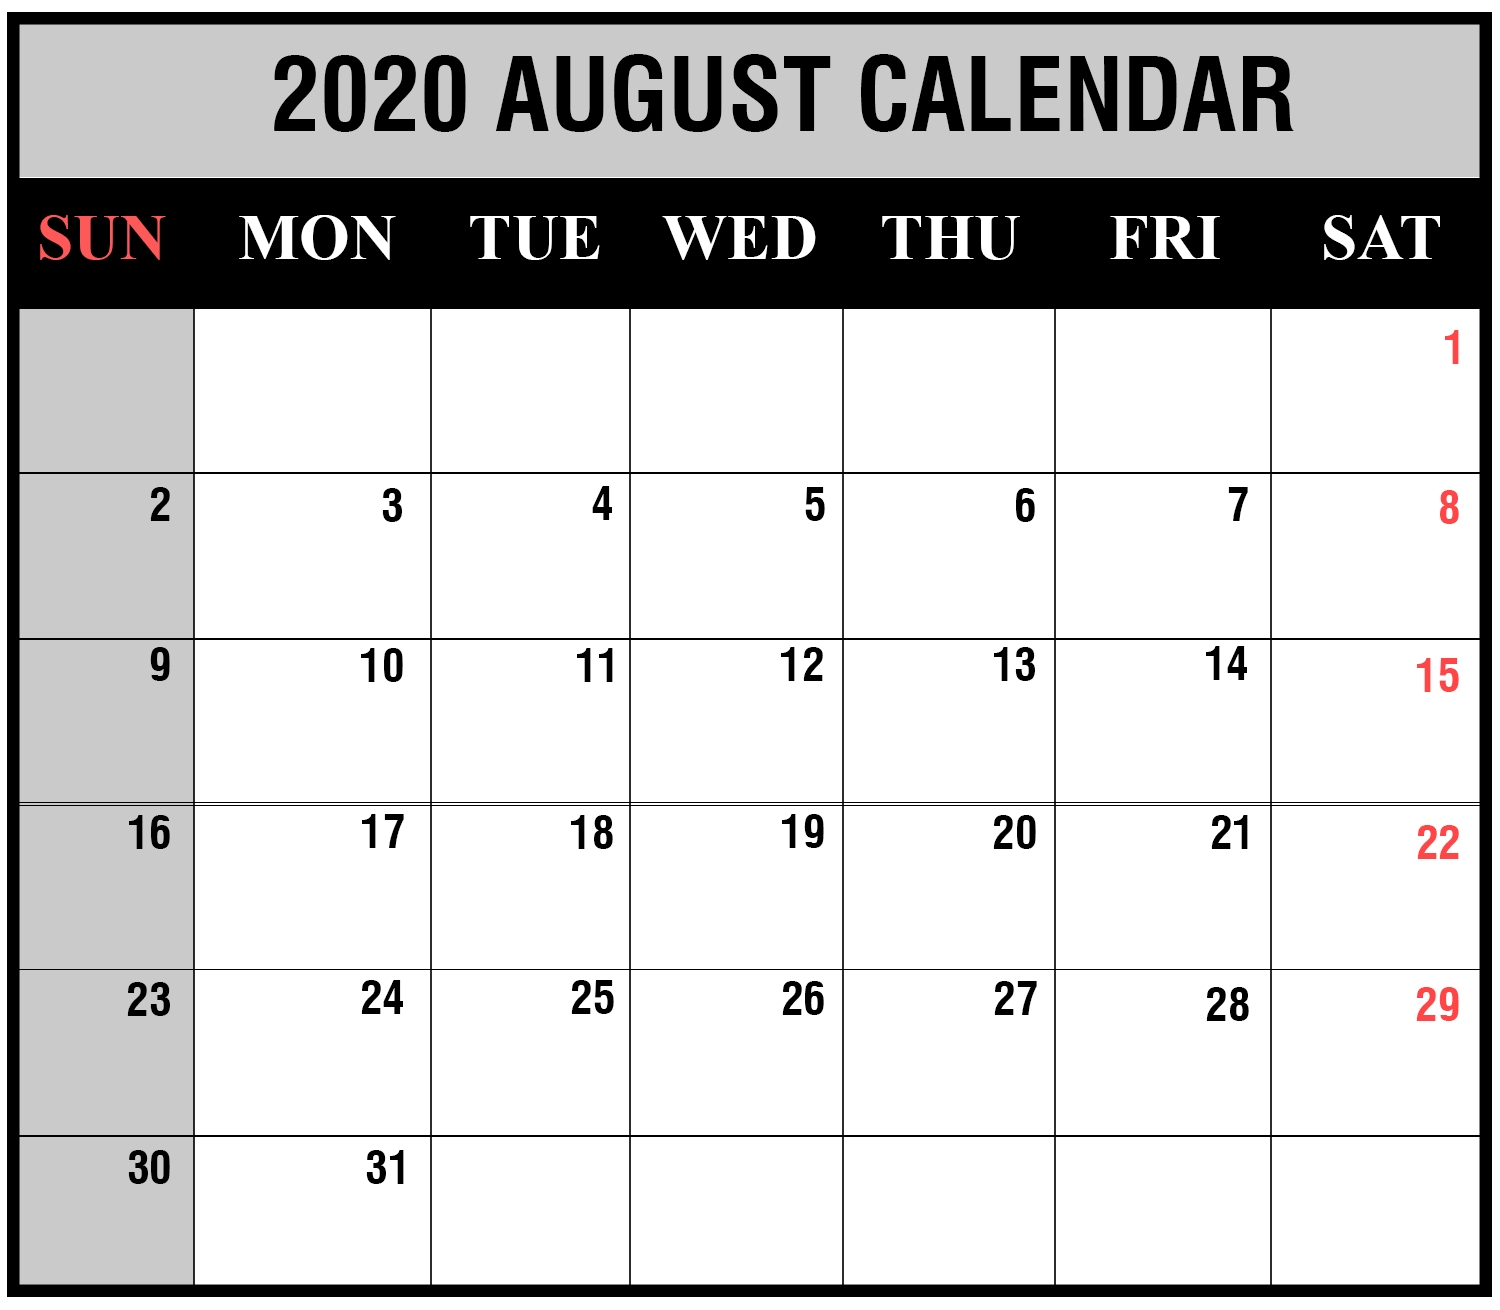 August Calendar 2020 In 2020 | August Calendar, Printable Calendar Template, Calendar Printables August 2020-August 2021 Calendar